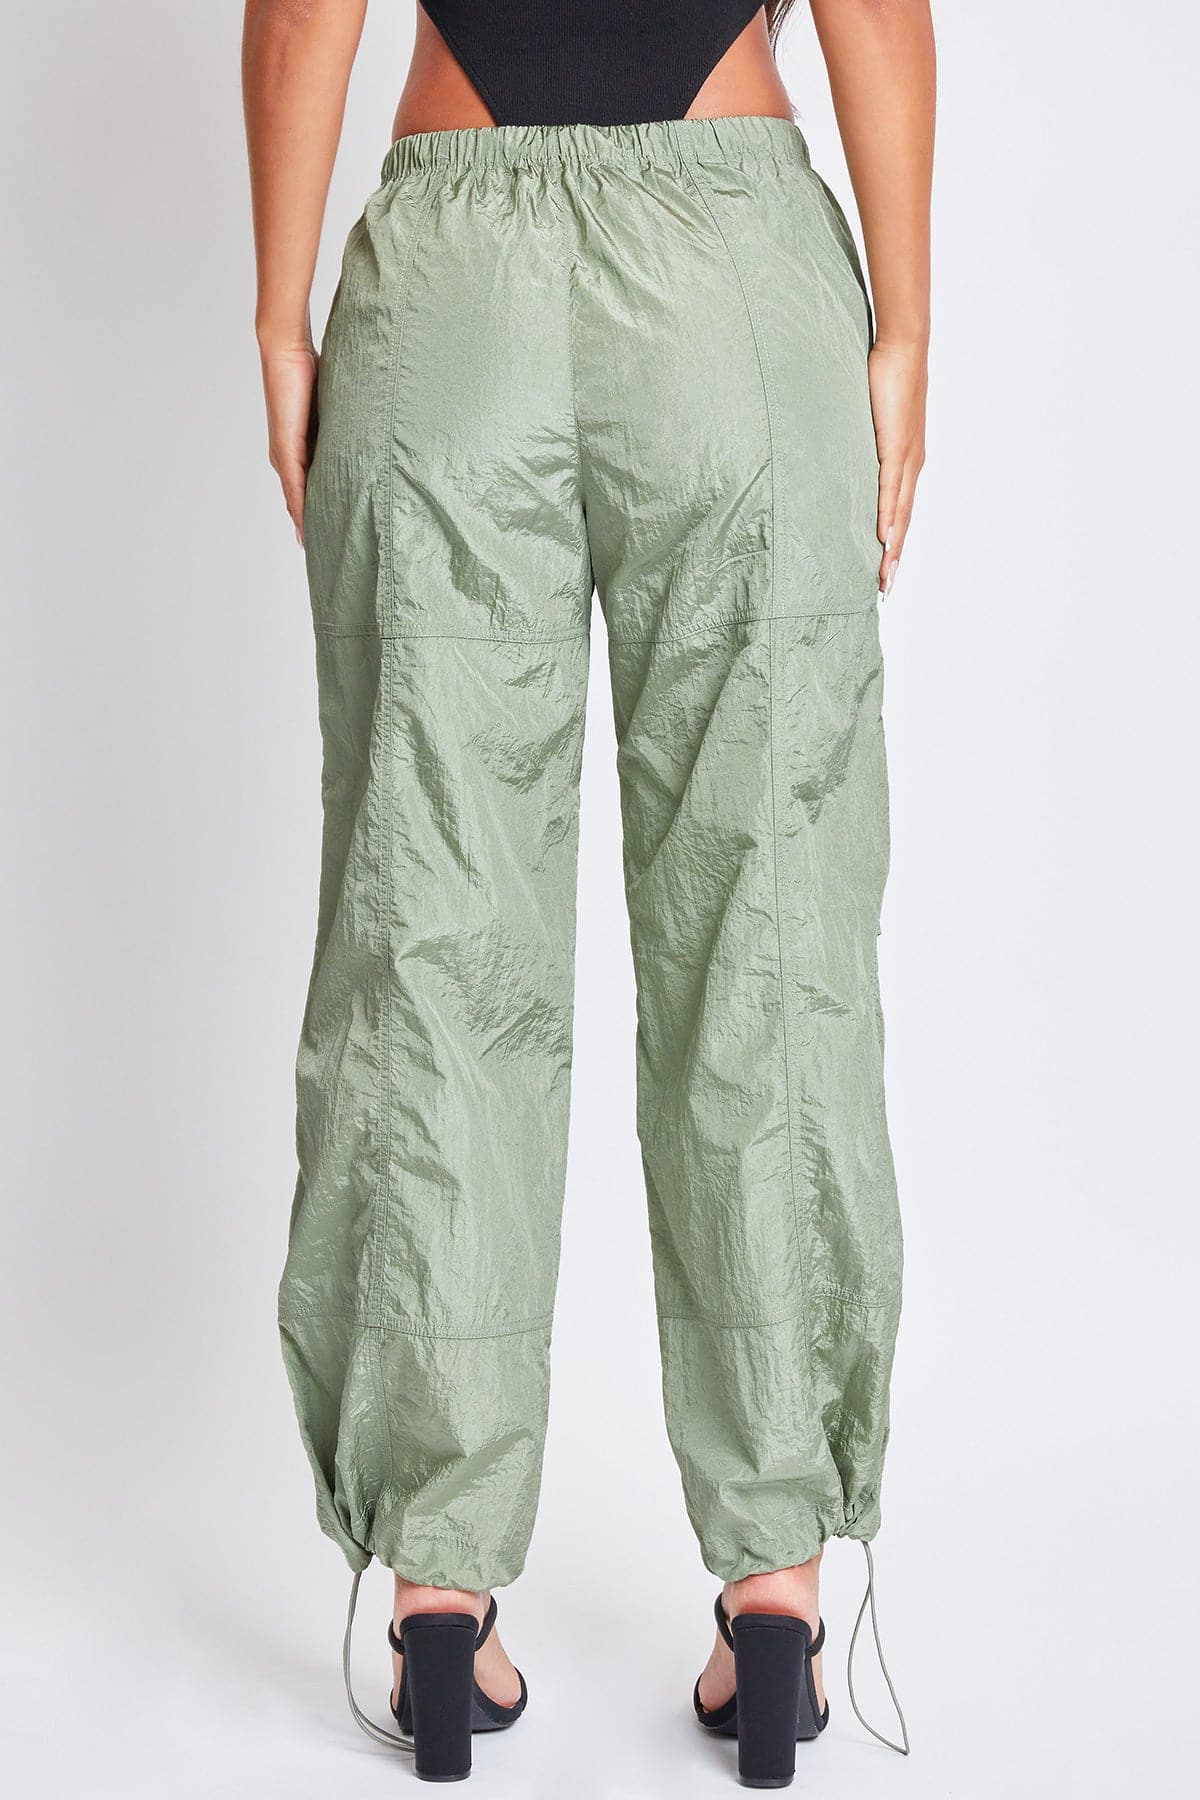 Women's Pull-On Nylon Parachute Pants